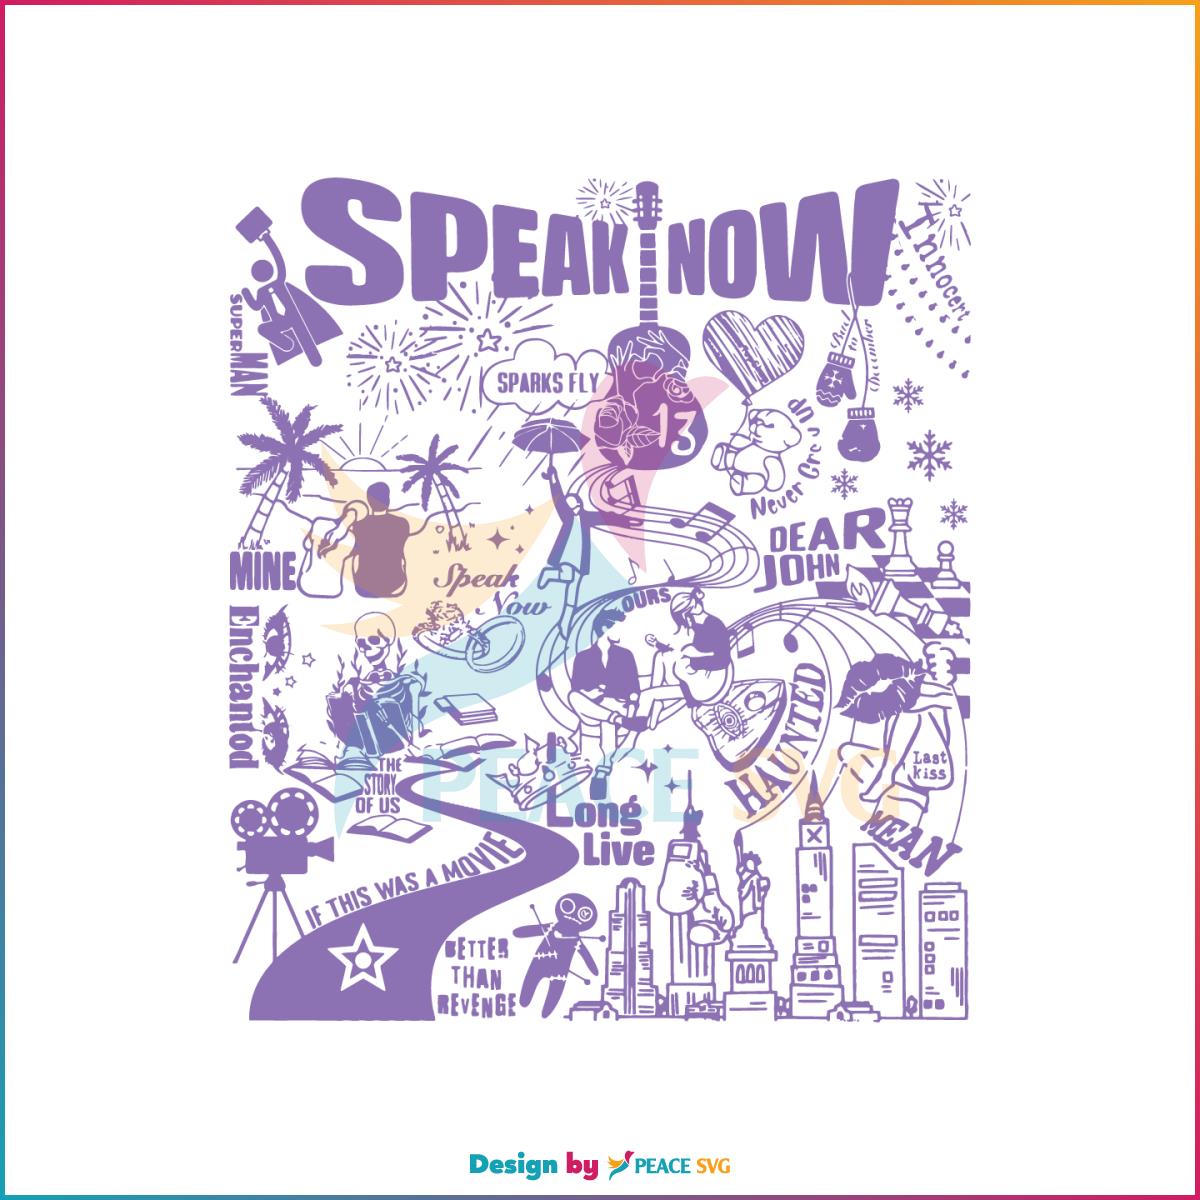 speak-now-taylors-version-tracklist-svg-the-eras-tour-svg-file